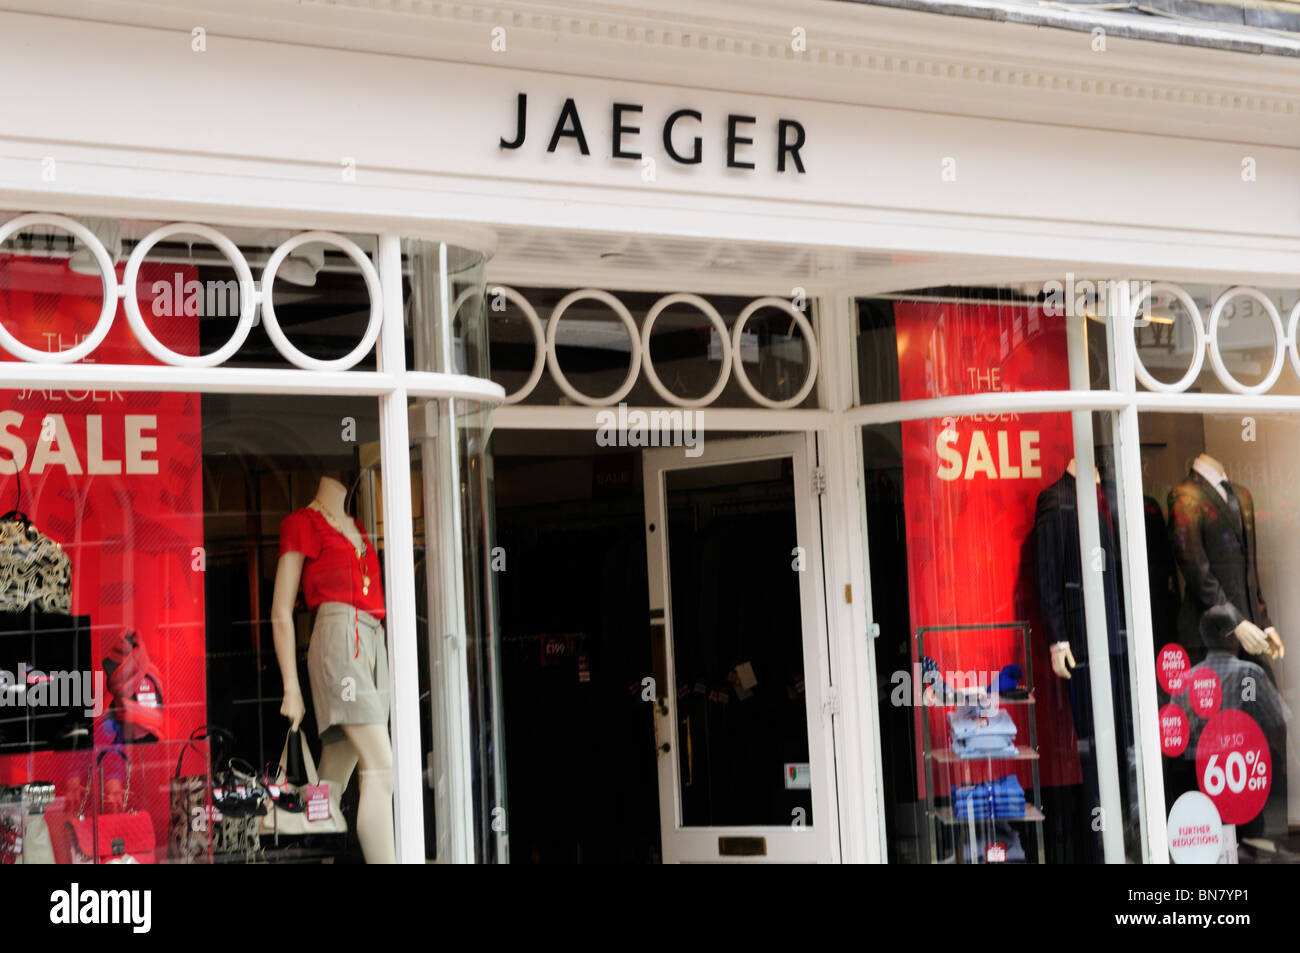 Magasin de vêtements Jaeger, Trinity Street, Cambridge, England, UK Banque D'Images